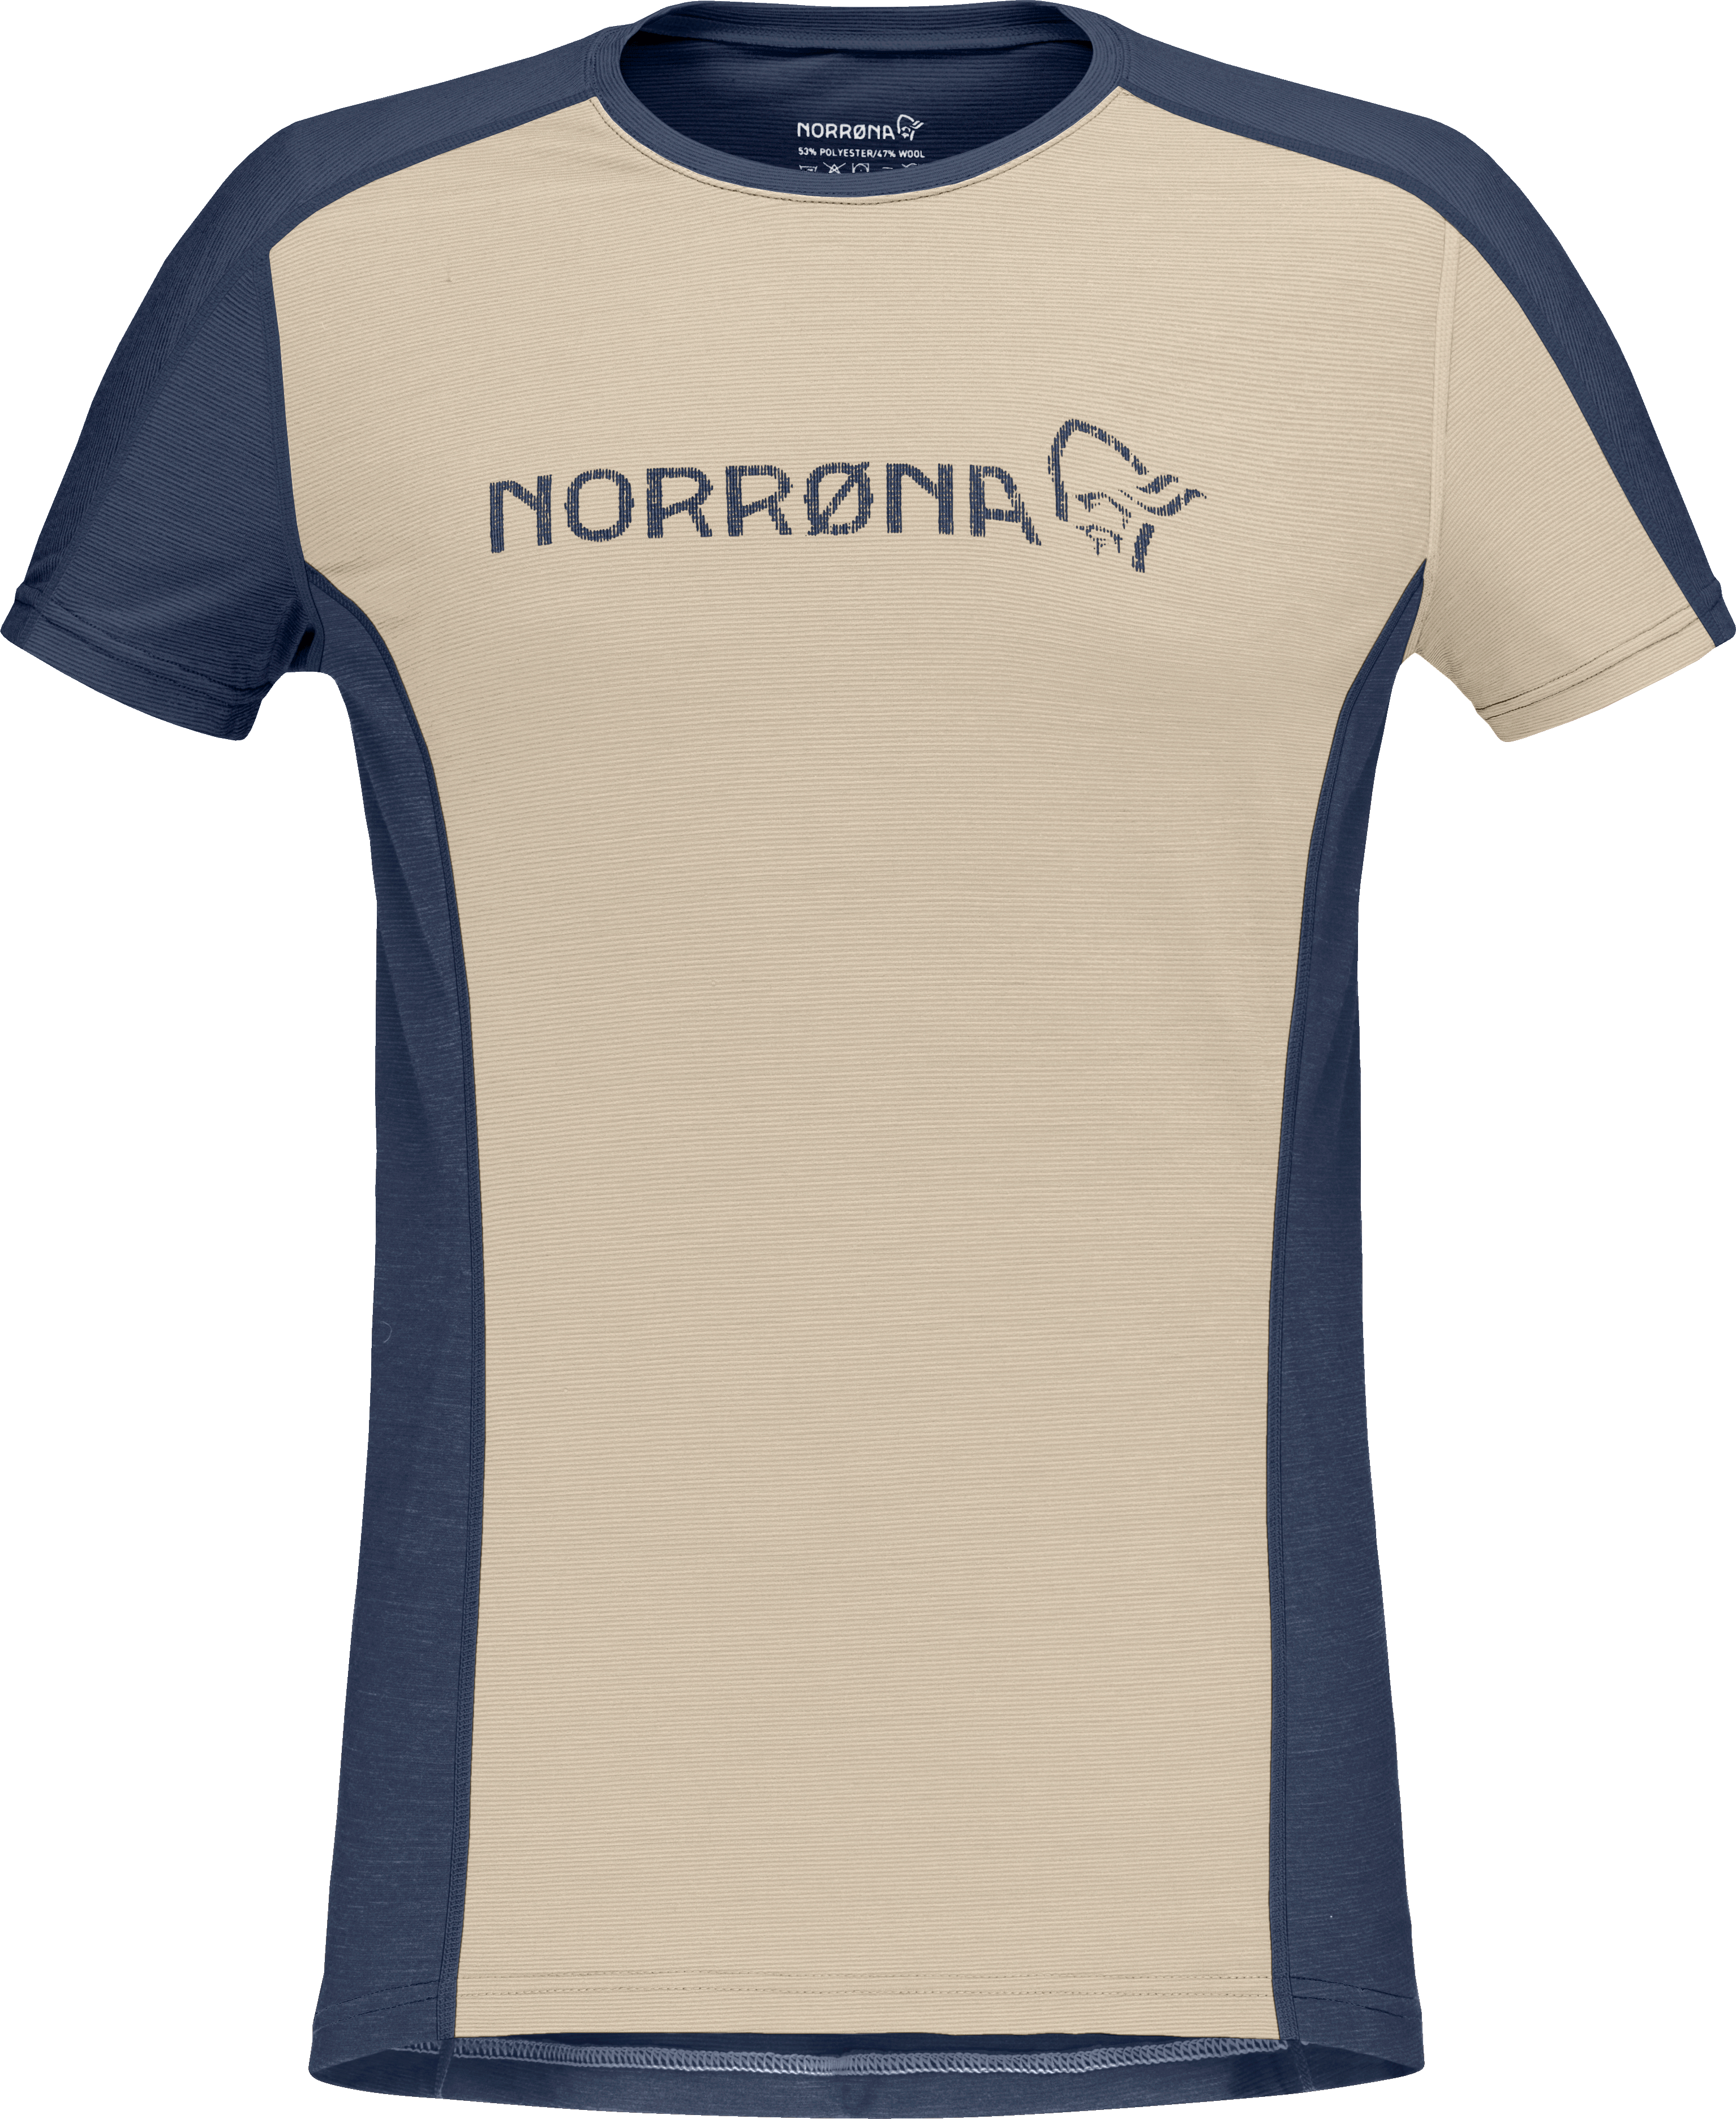 Norrøna Women’s Falketind Equaliser Merino T-Shirt Pure Cashmere